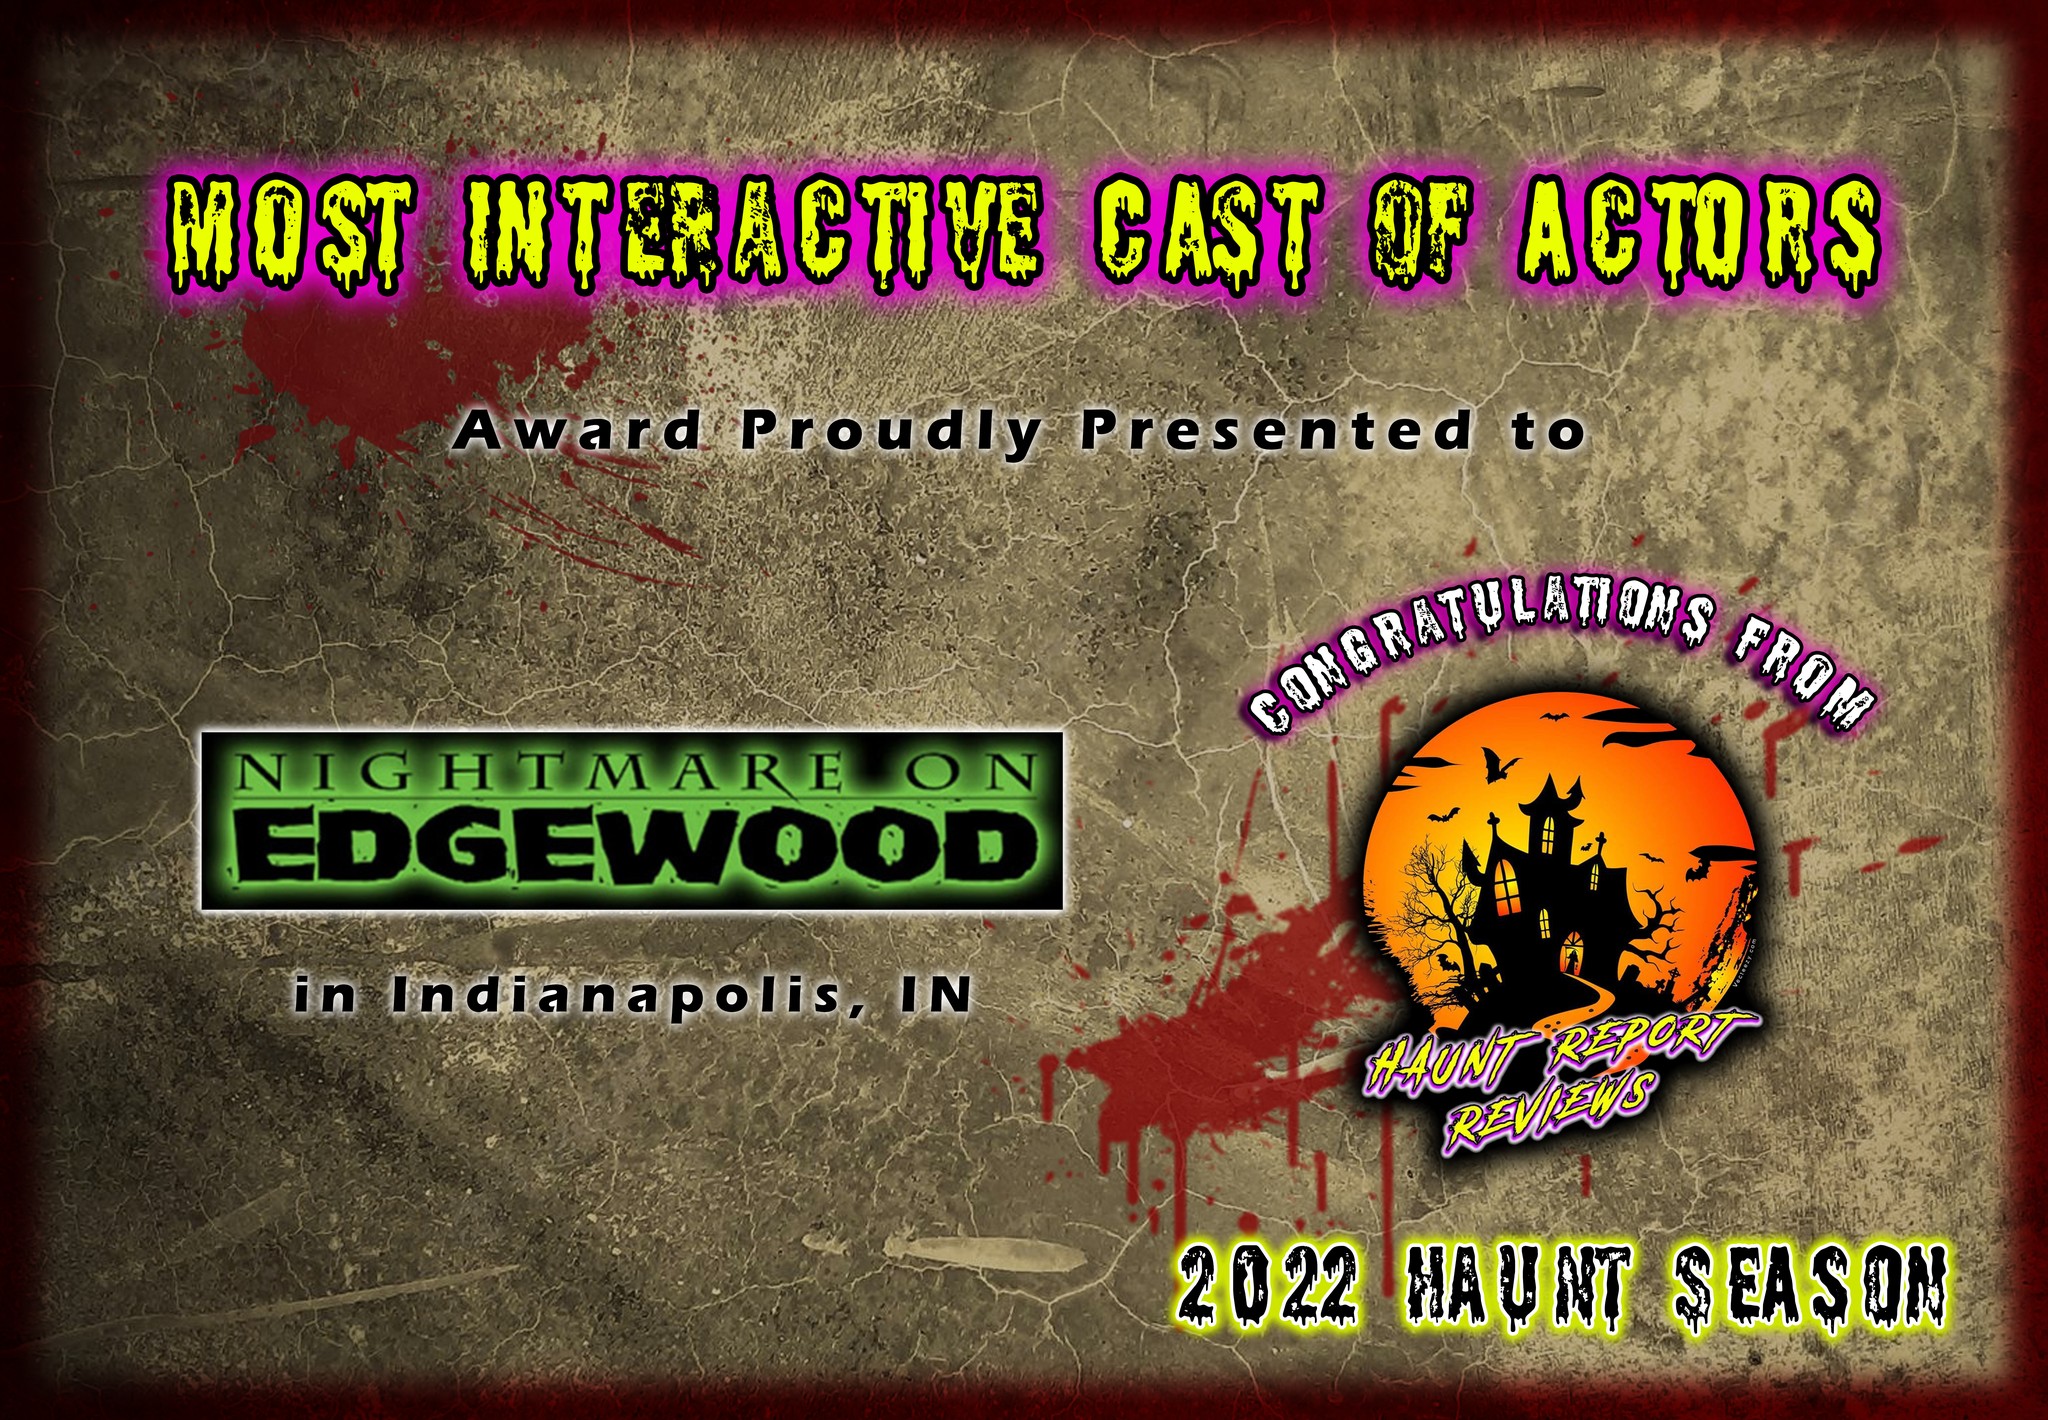 Most interactive cast of actors - Nightmare on Edgewood